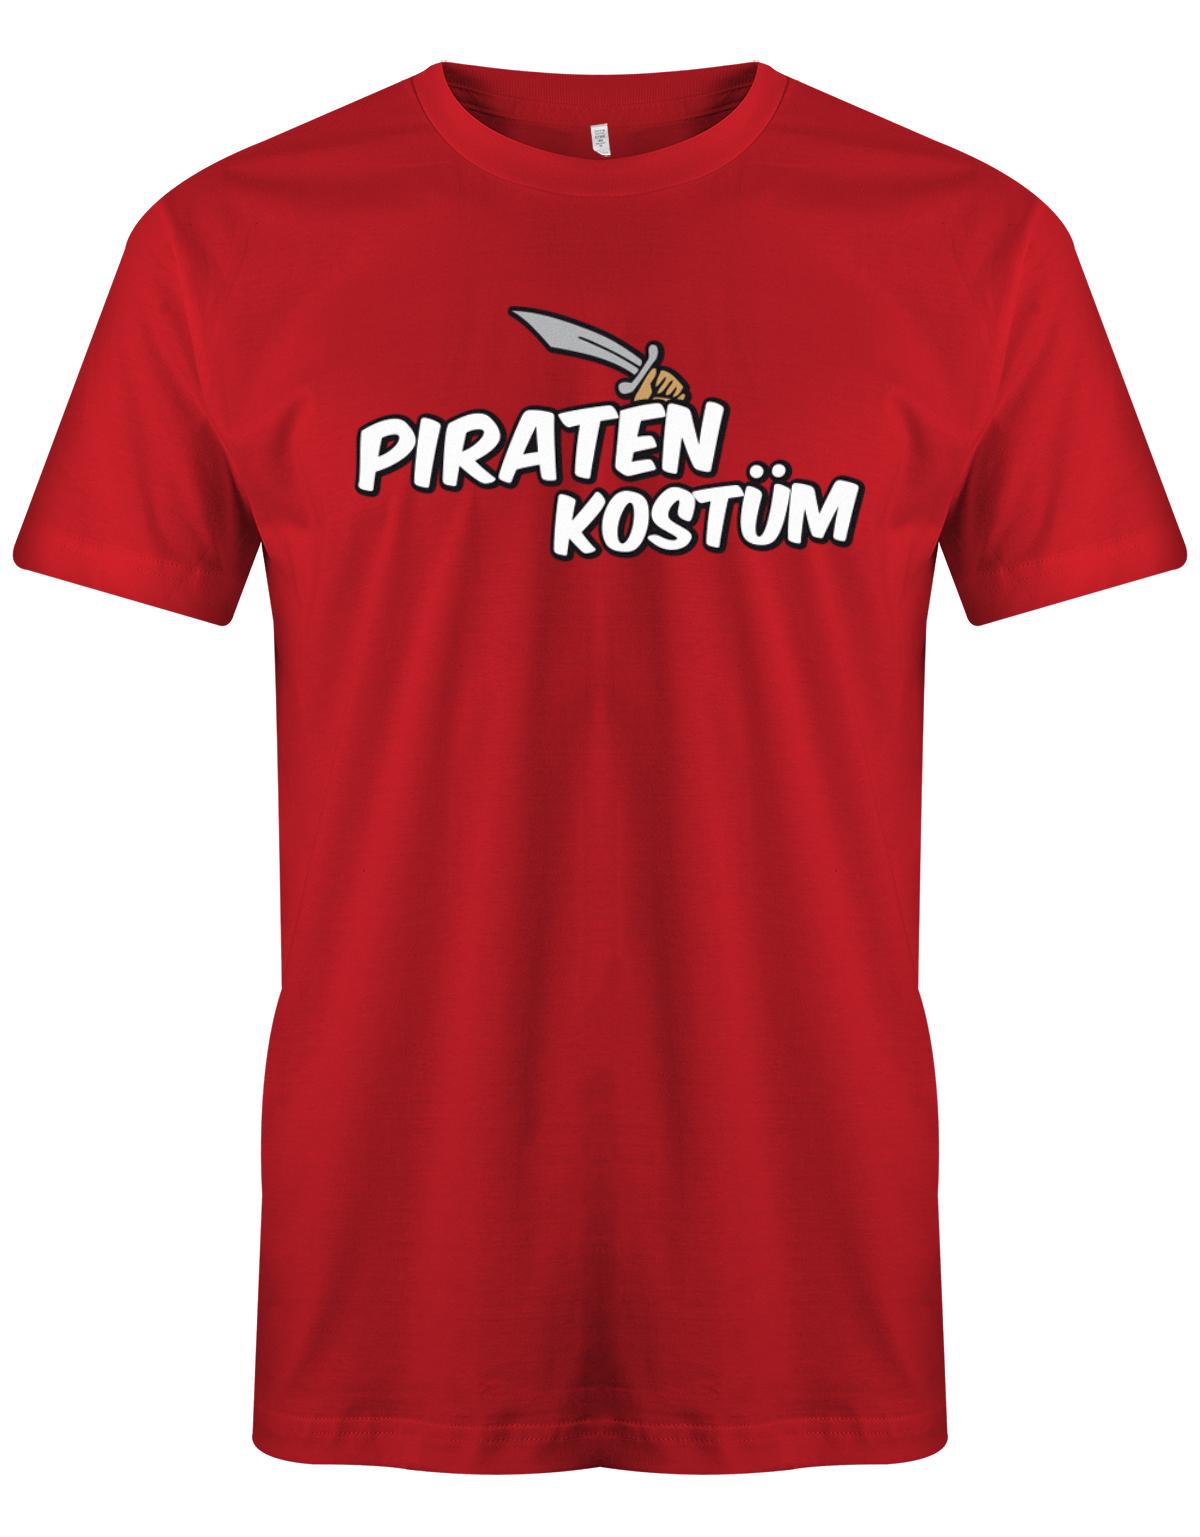 Piraten-Kost-m-Fasching-Karneval-herren-Shirt-Rot